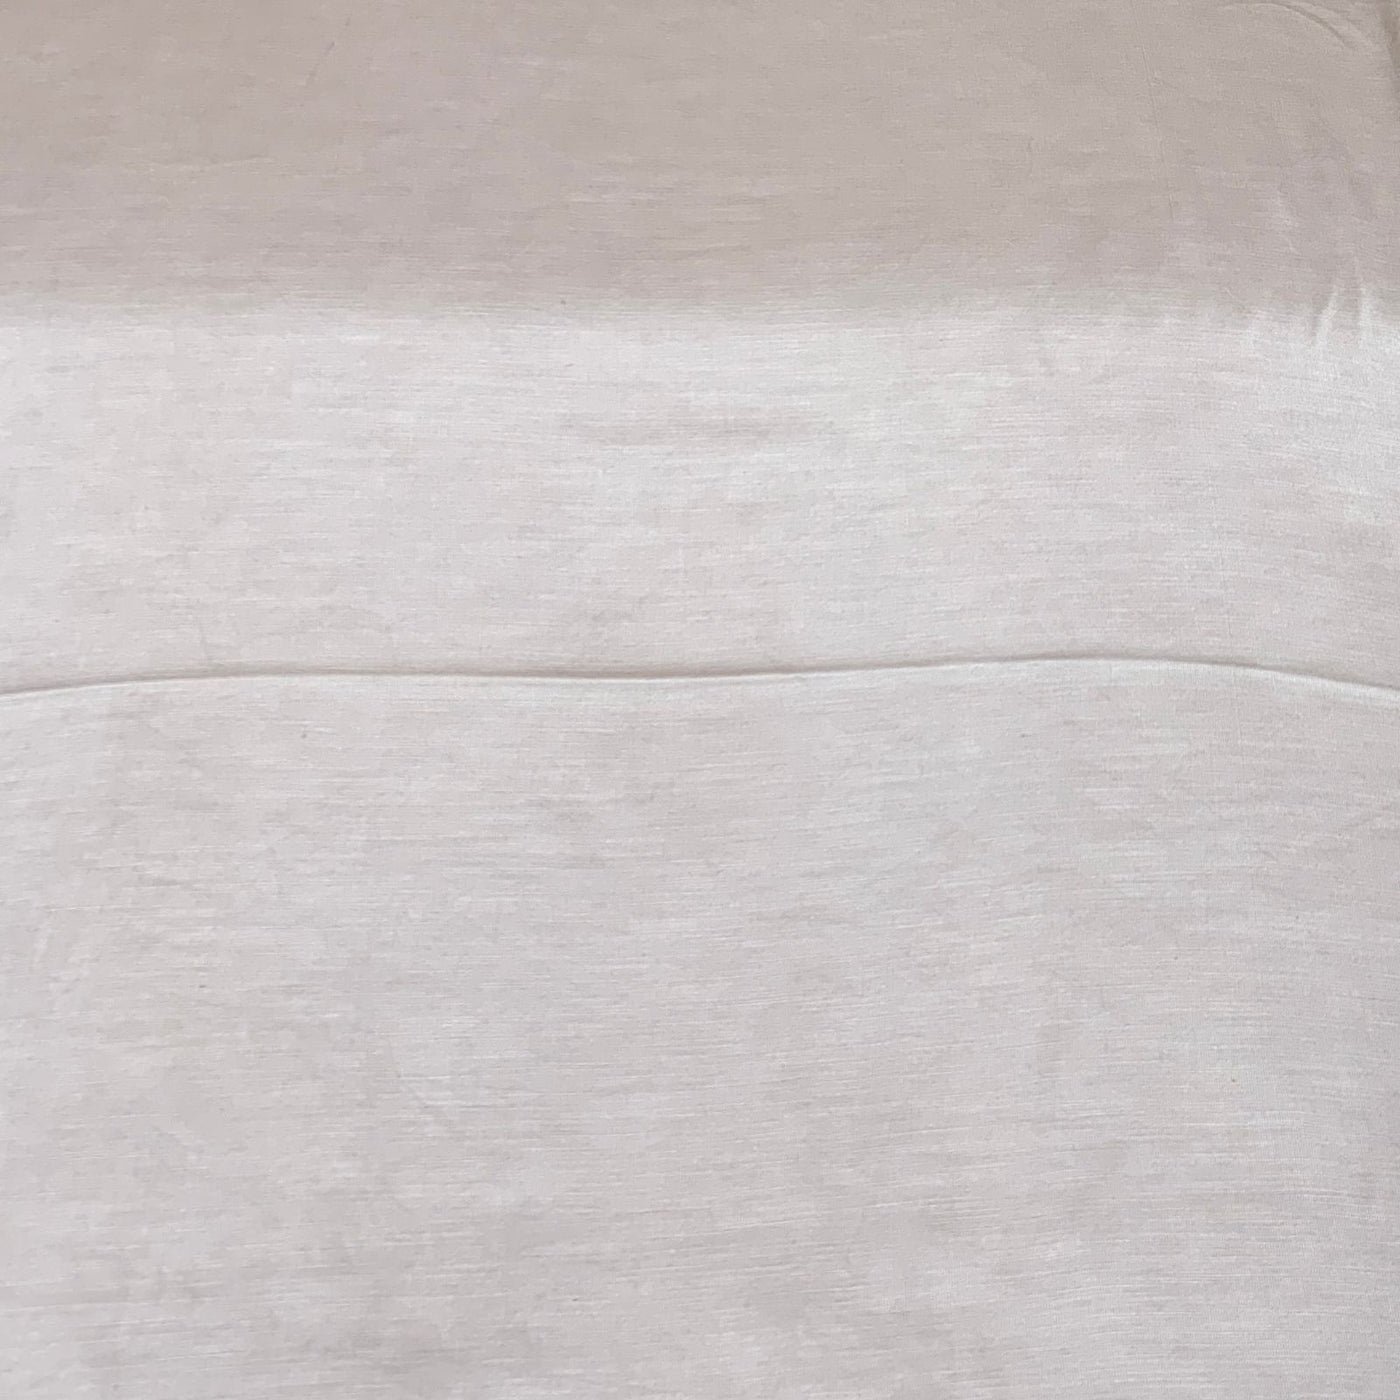 Mude Plain Satin Linen Fabric